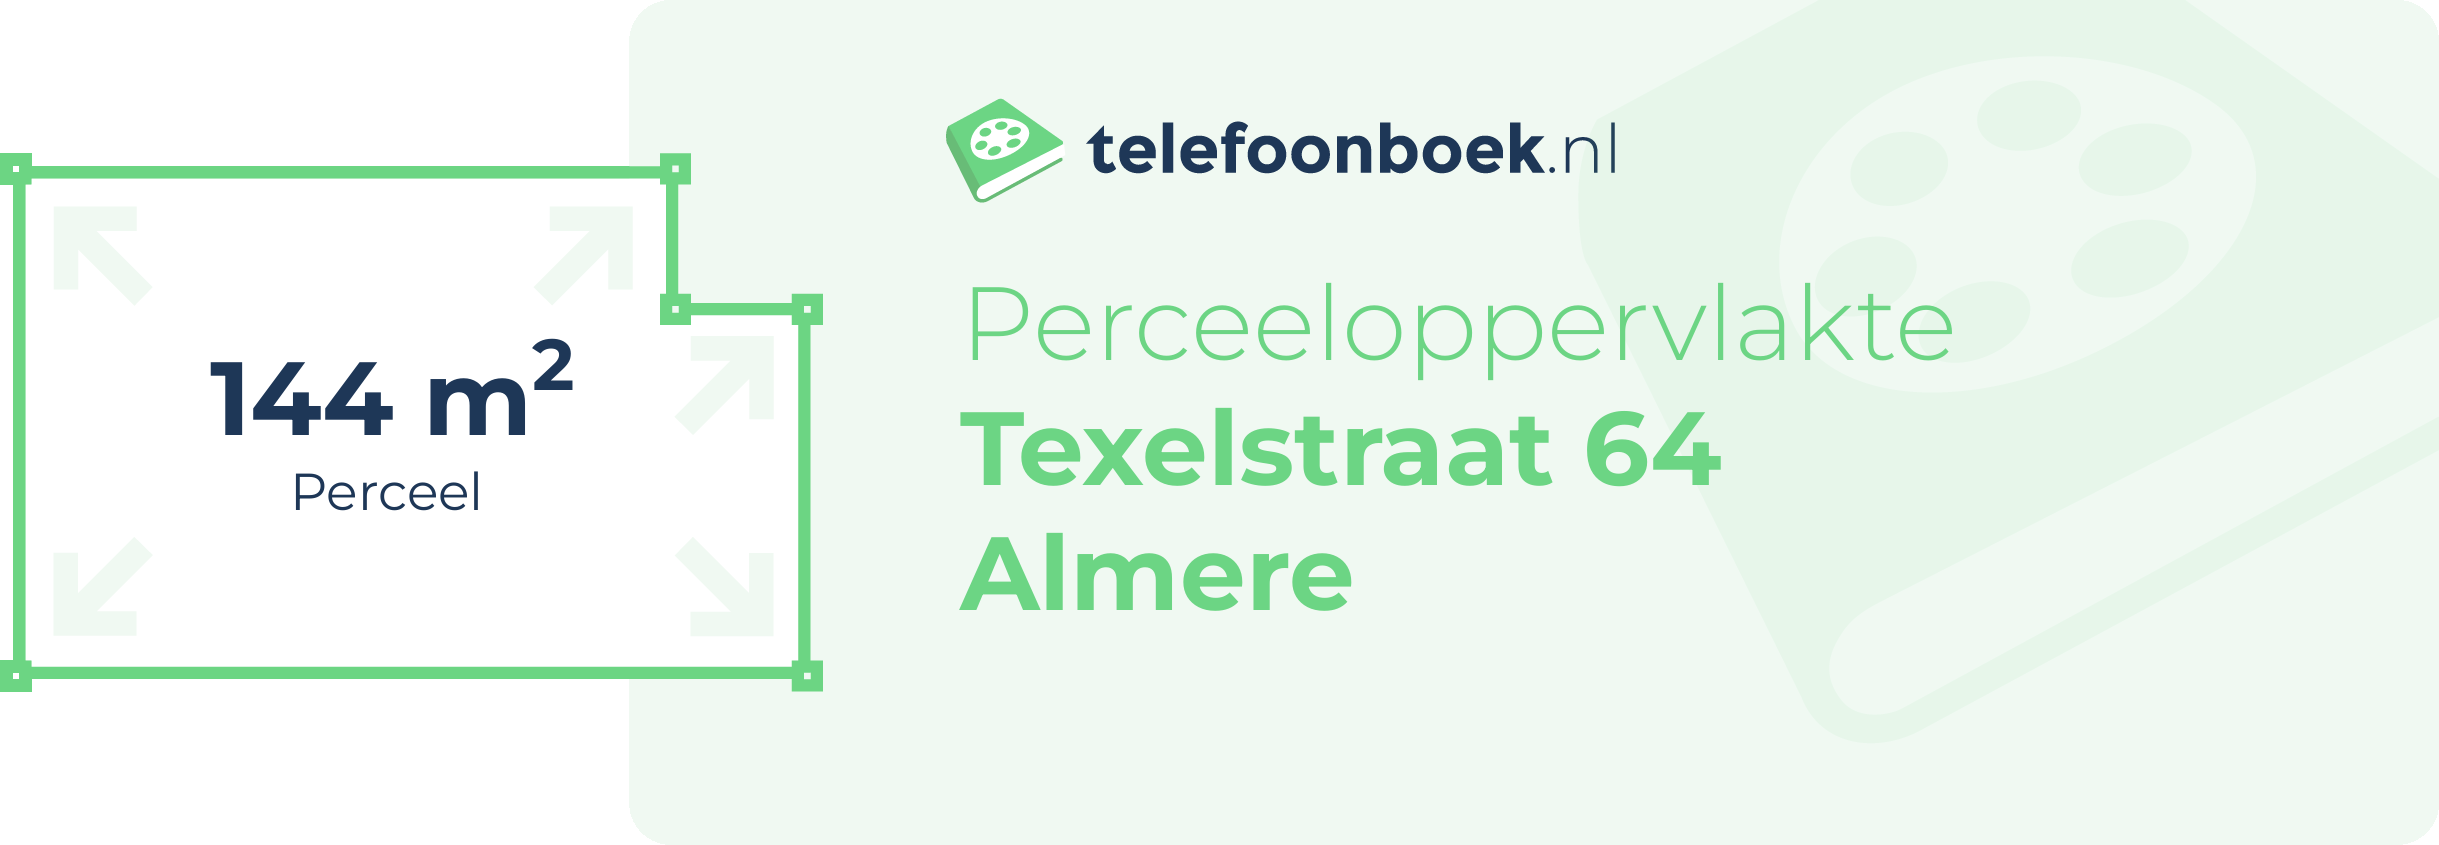 Perceeloppervlakte Texelstraat 64 Almere